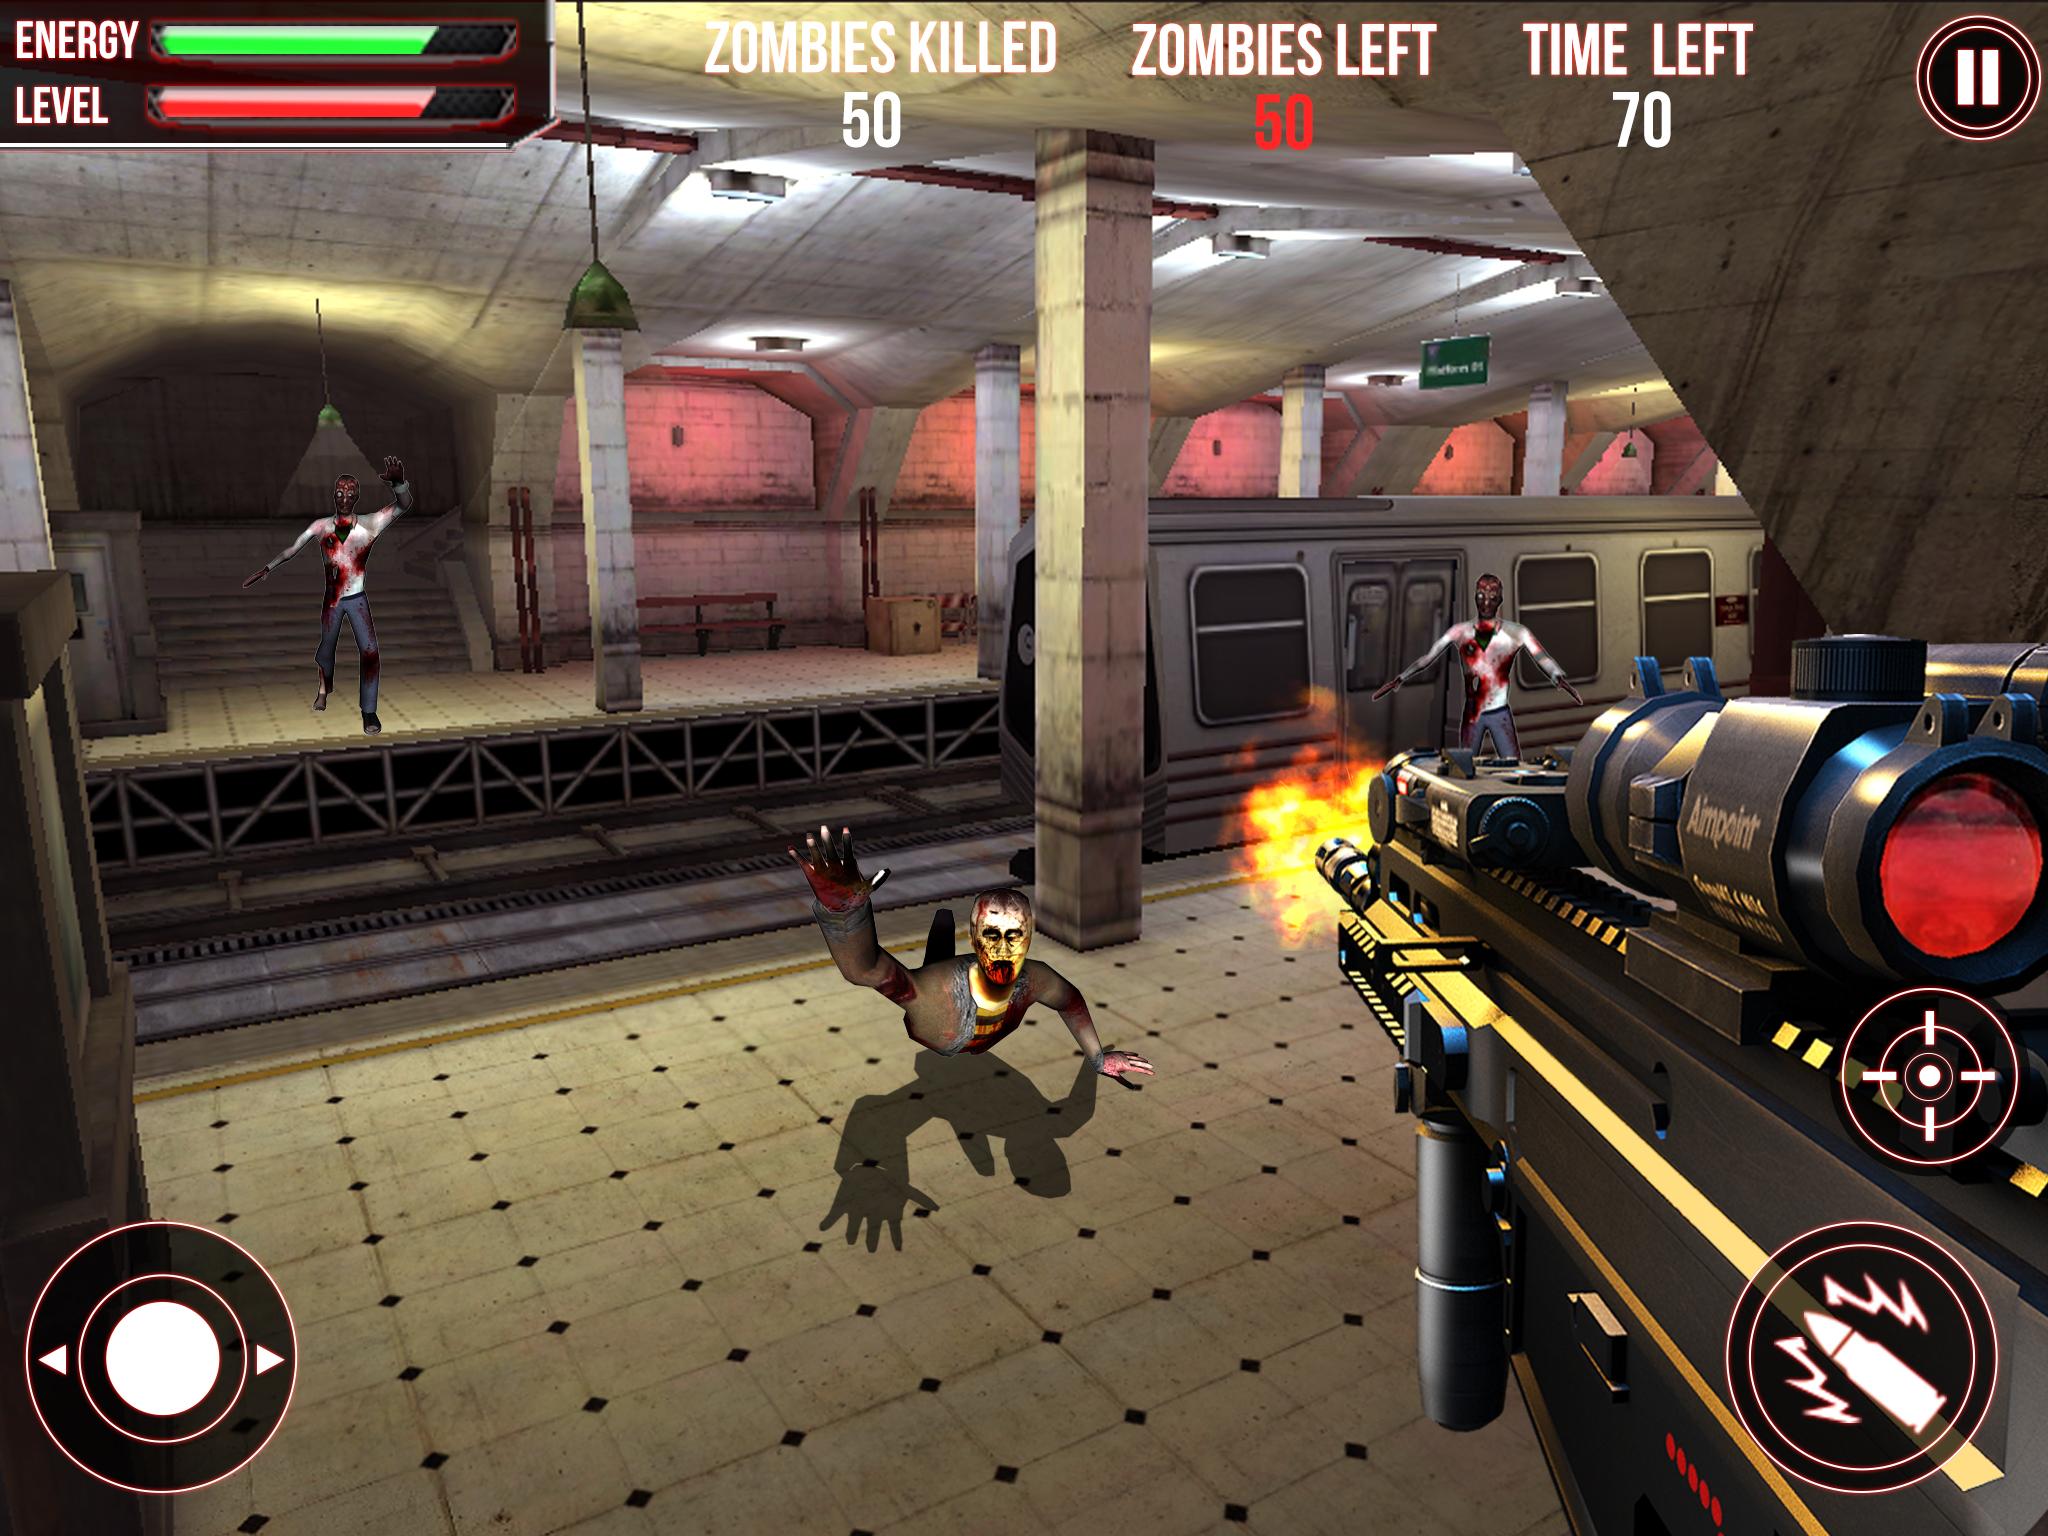 Subway Zombie Attack 3D – Game bắn zombie “hơi” kinh dị trên mobile